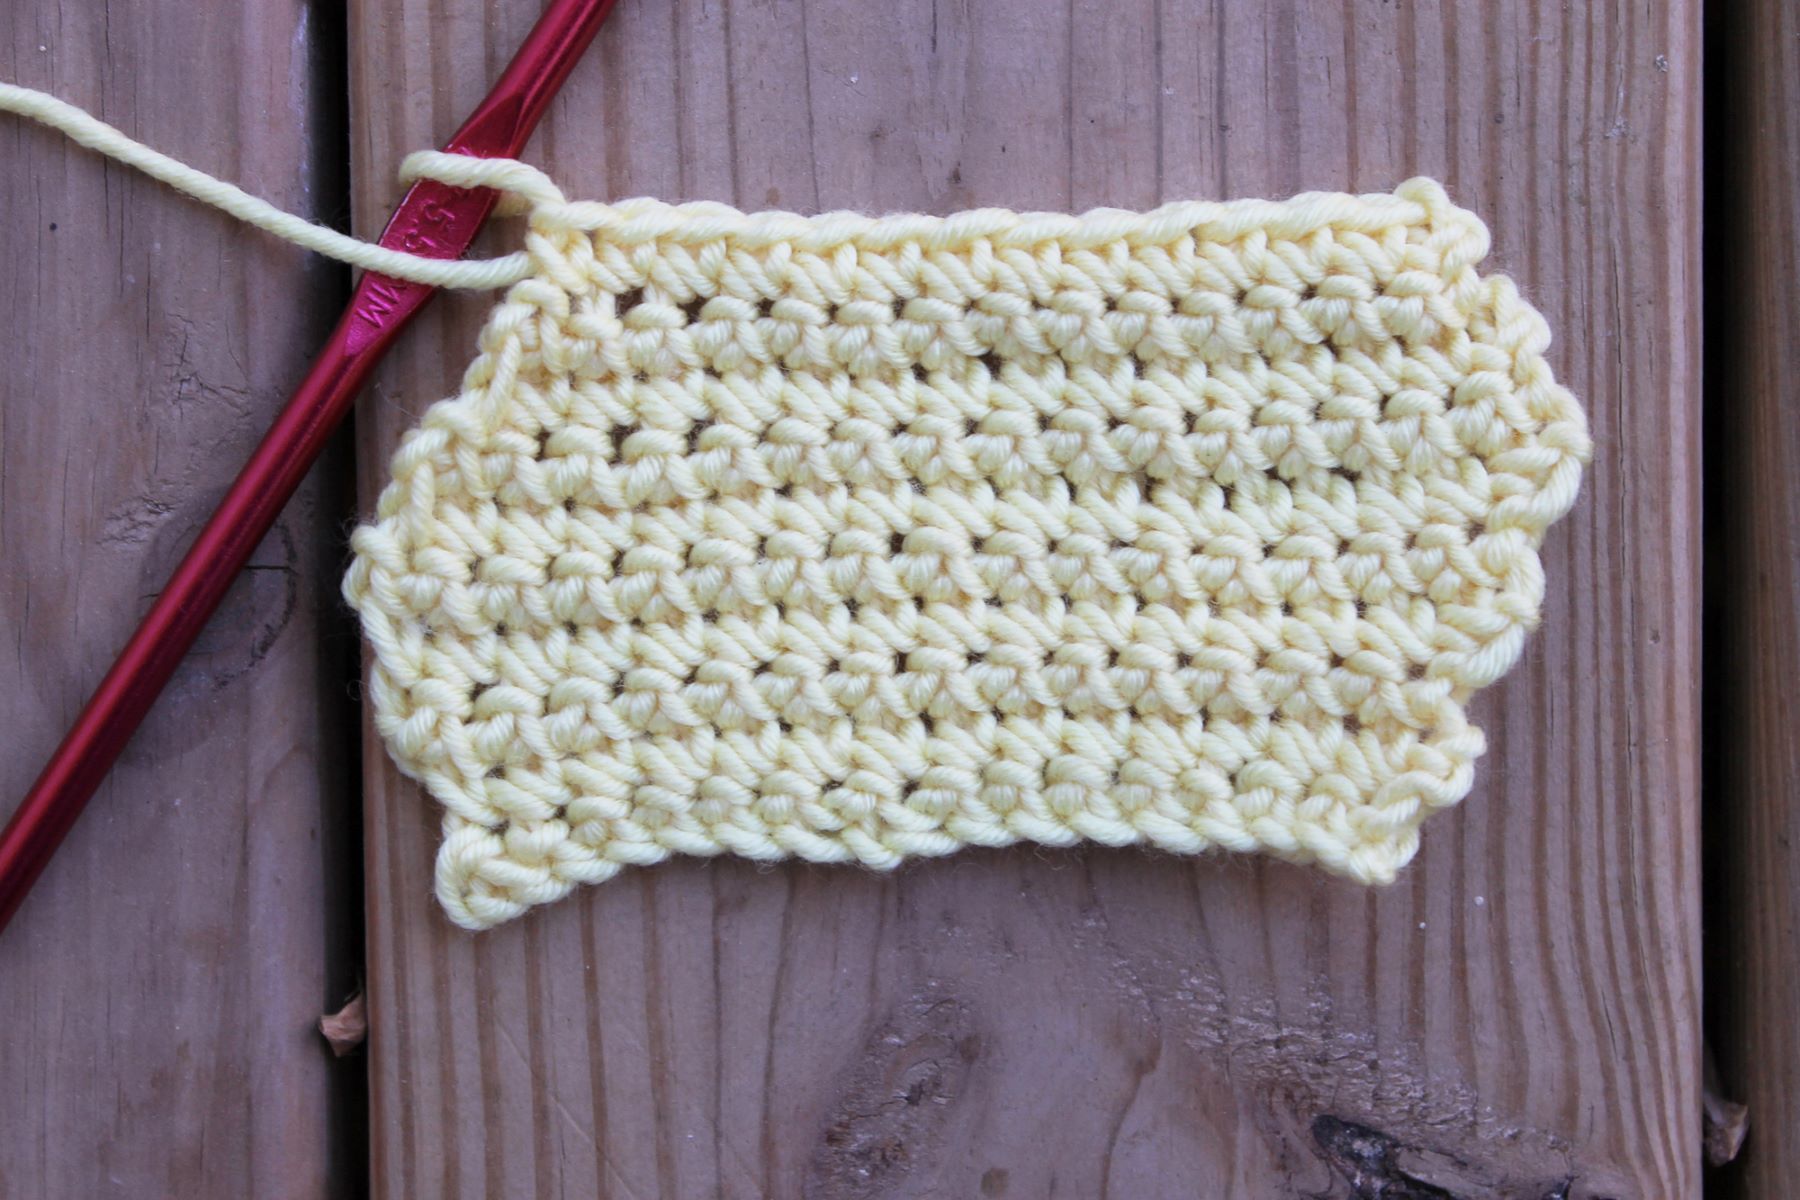 How To Fix Uneven Edges Of A Crochet Blanket